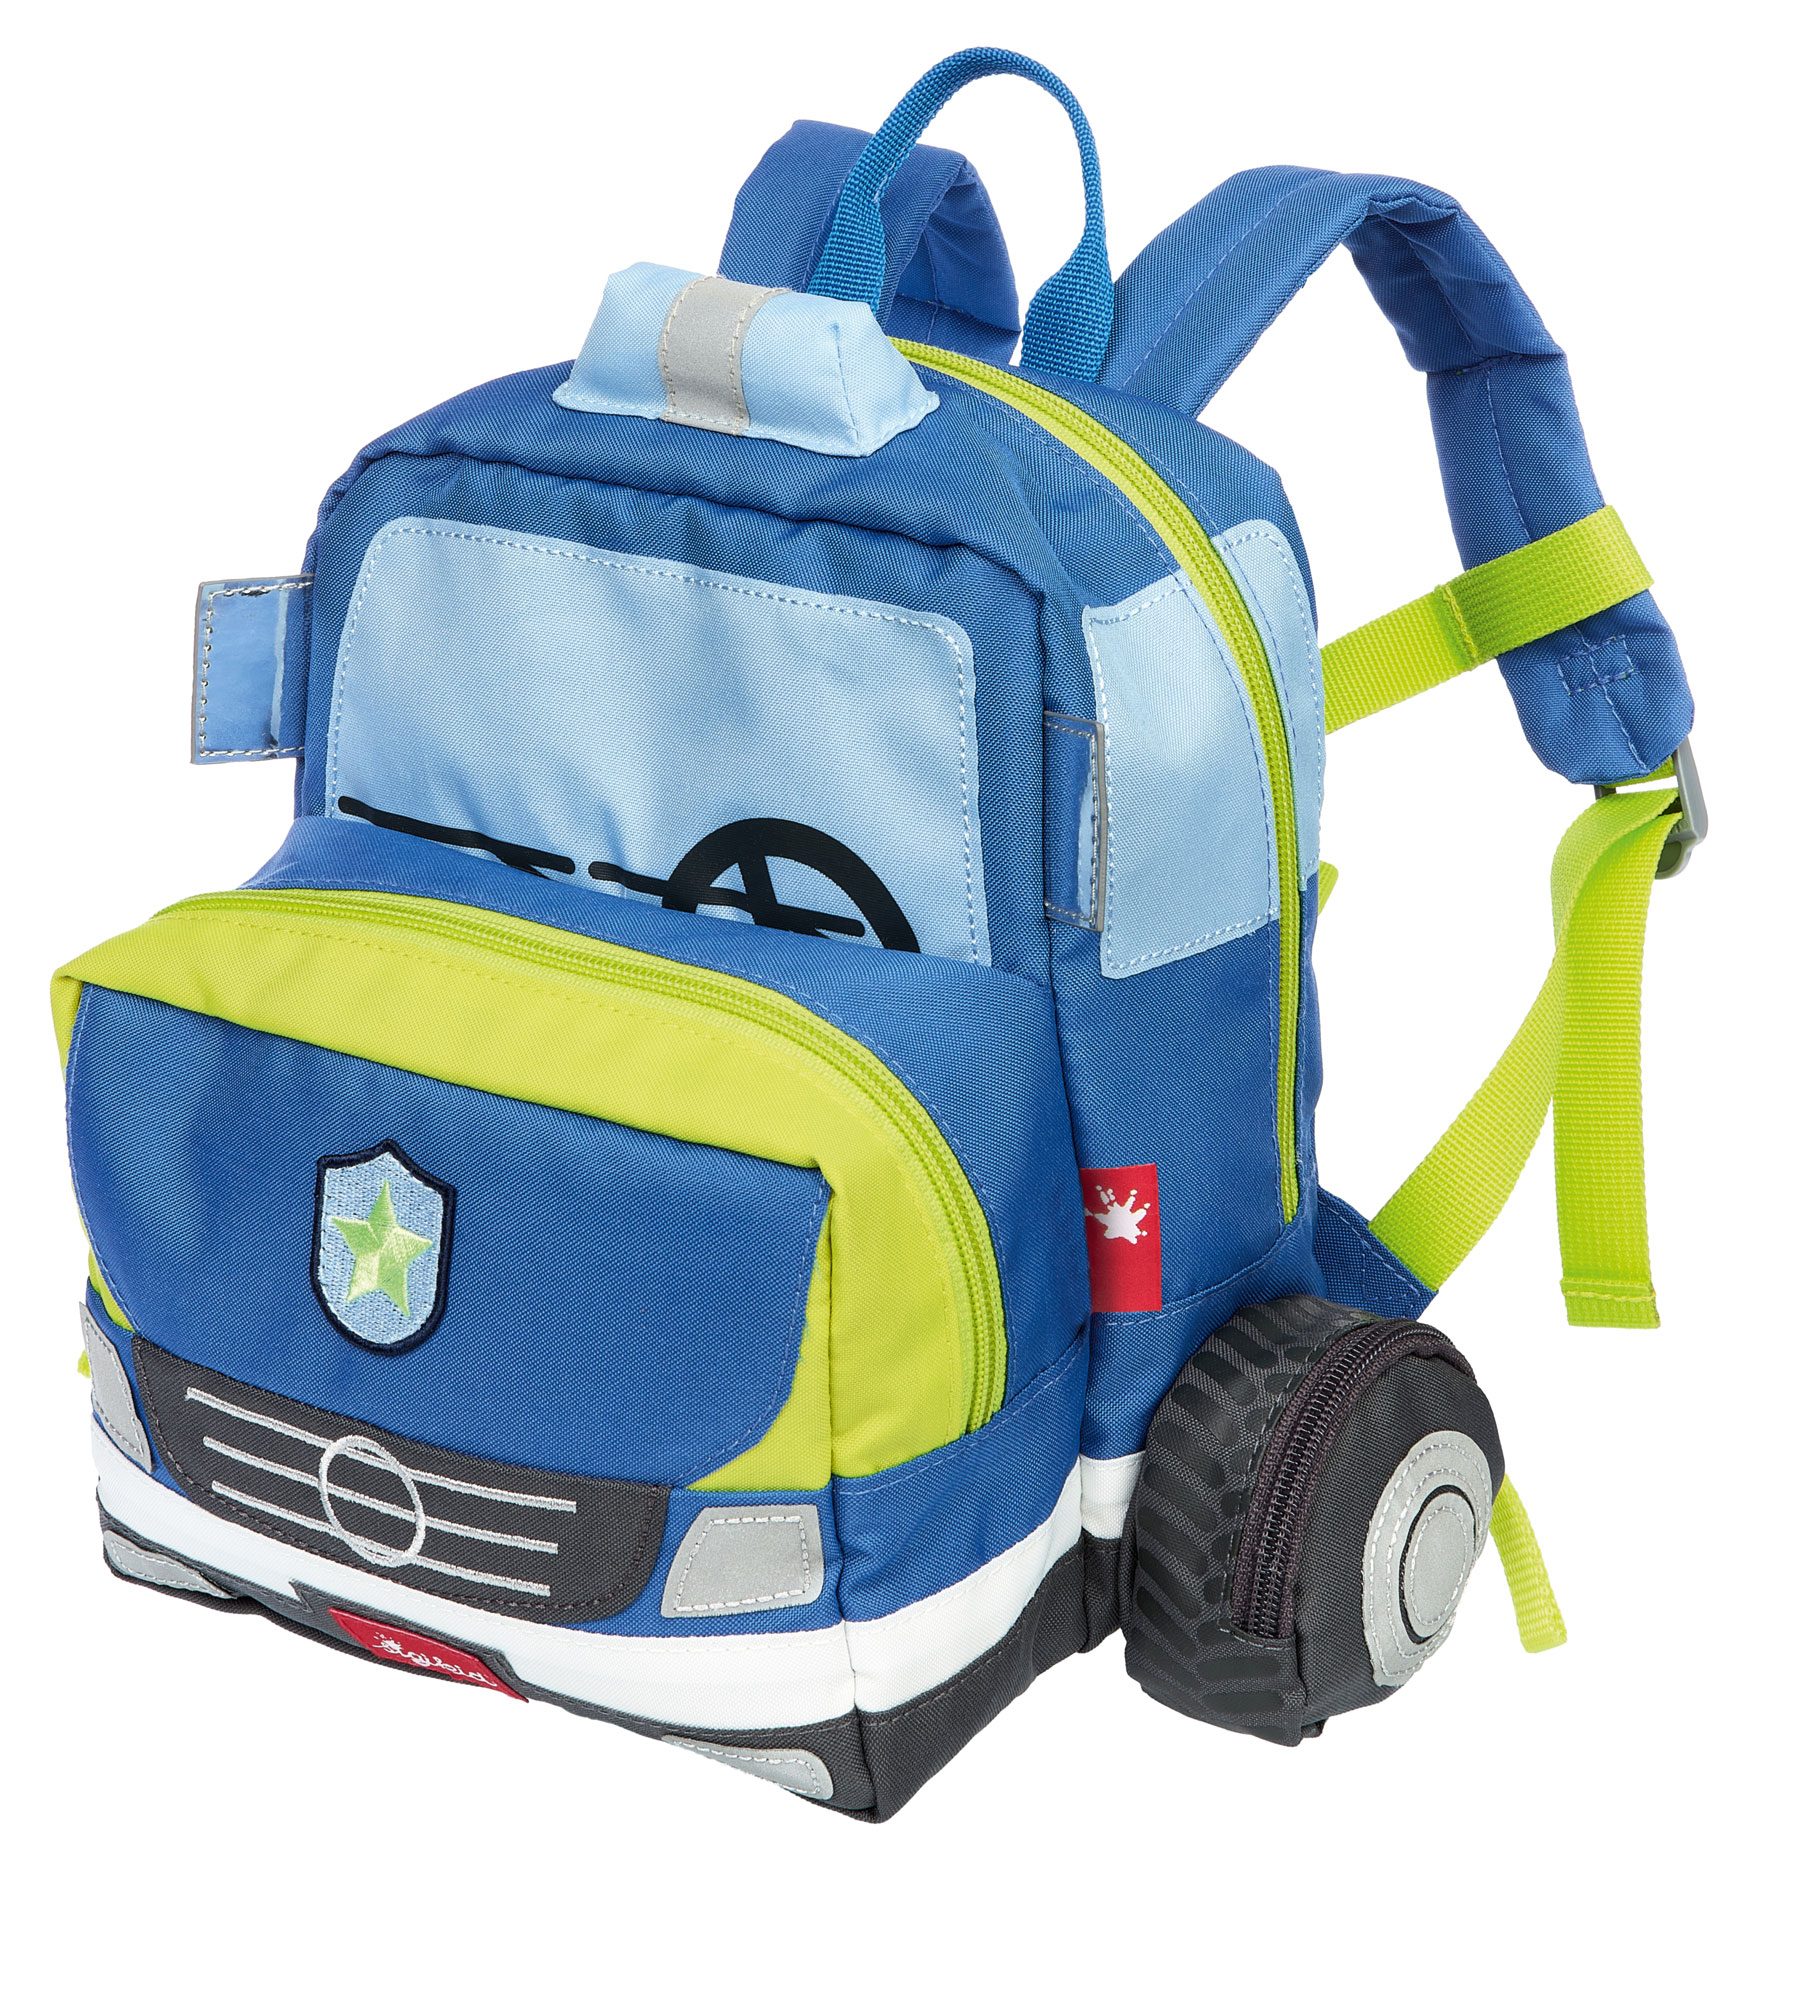 Children's backpack police car